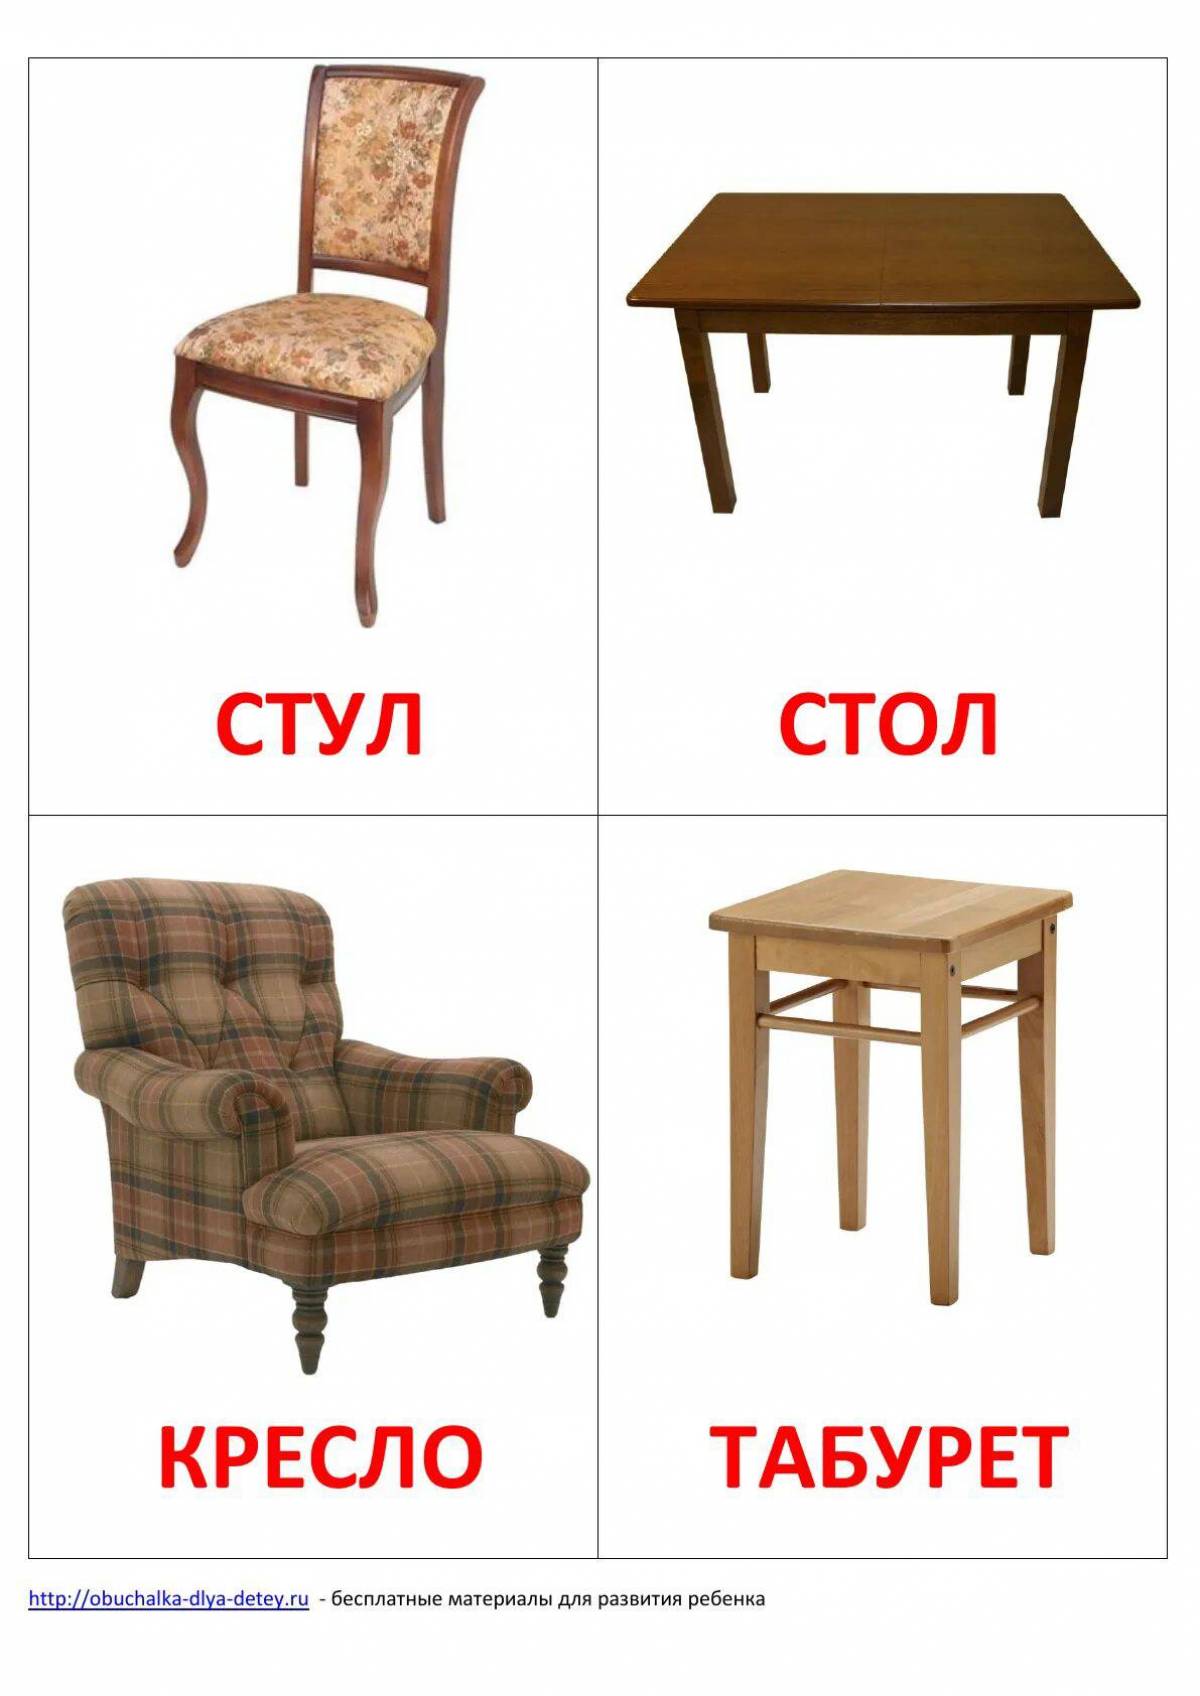 стул предмет мебели мебель